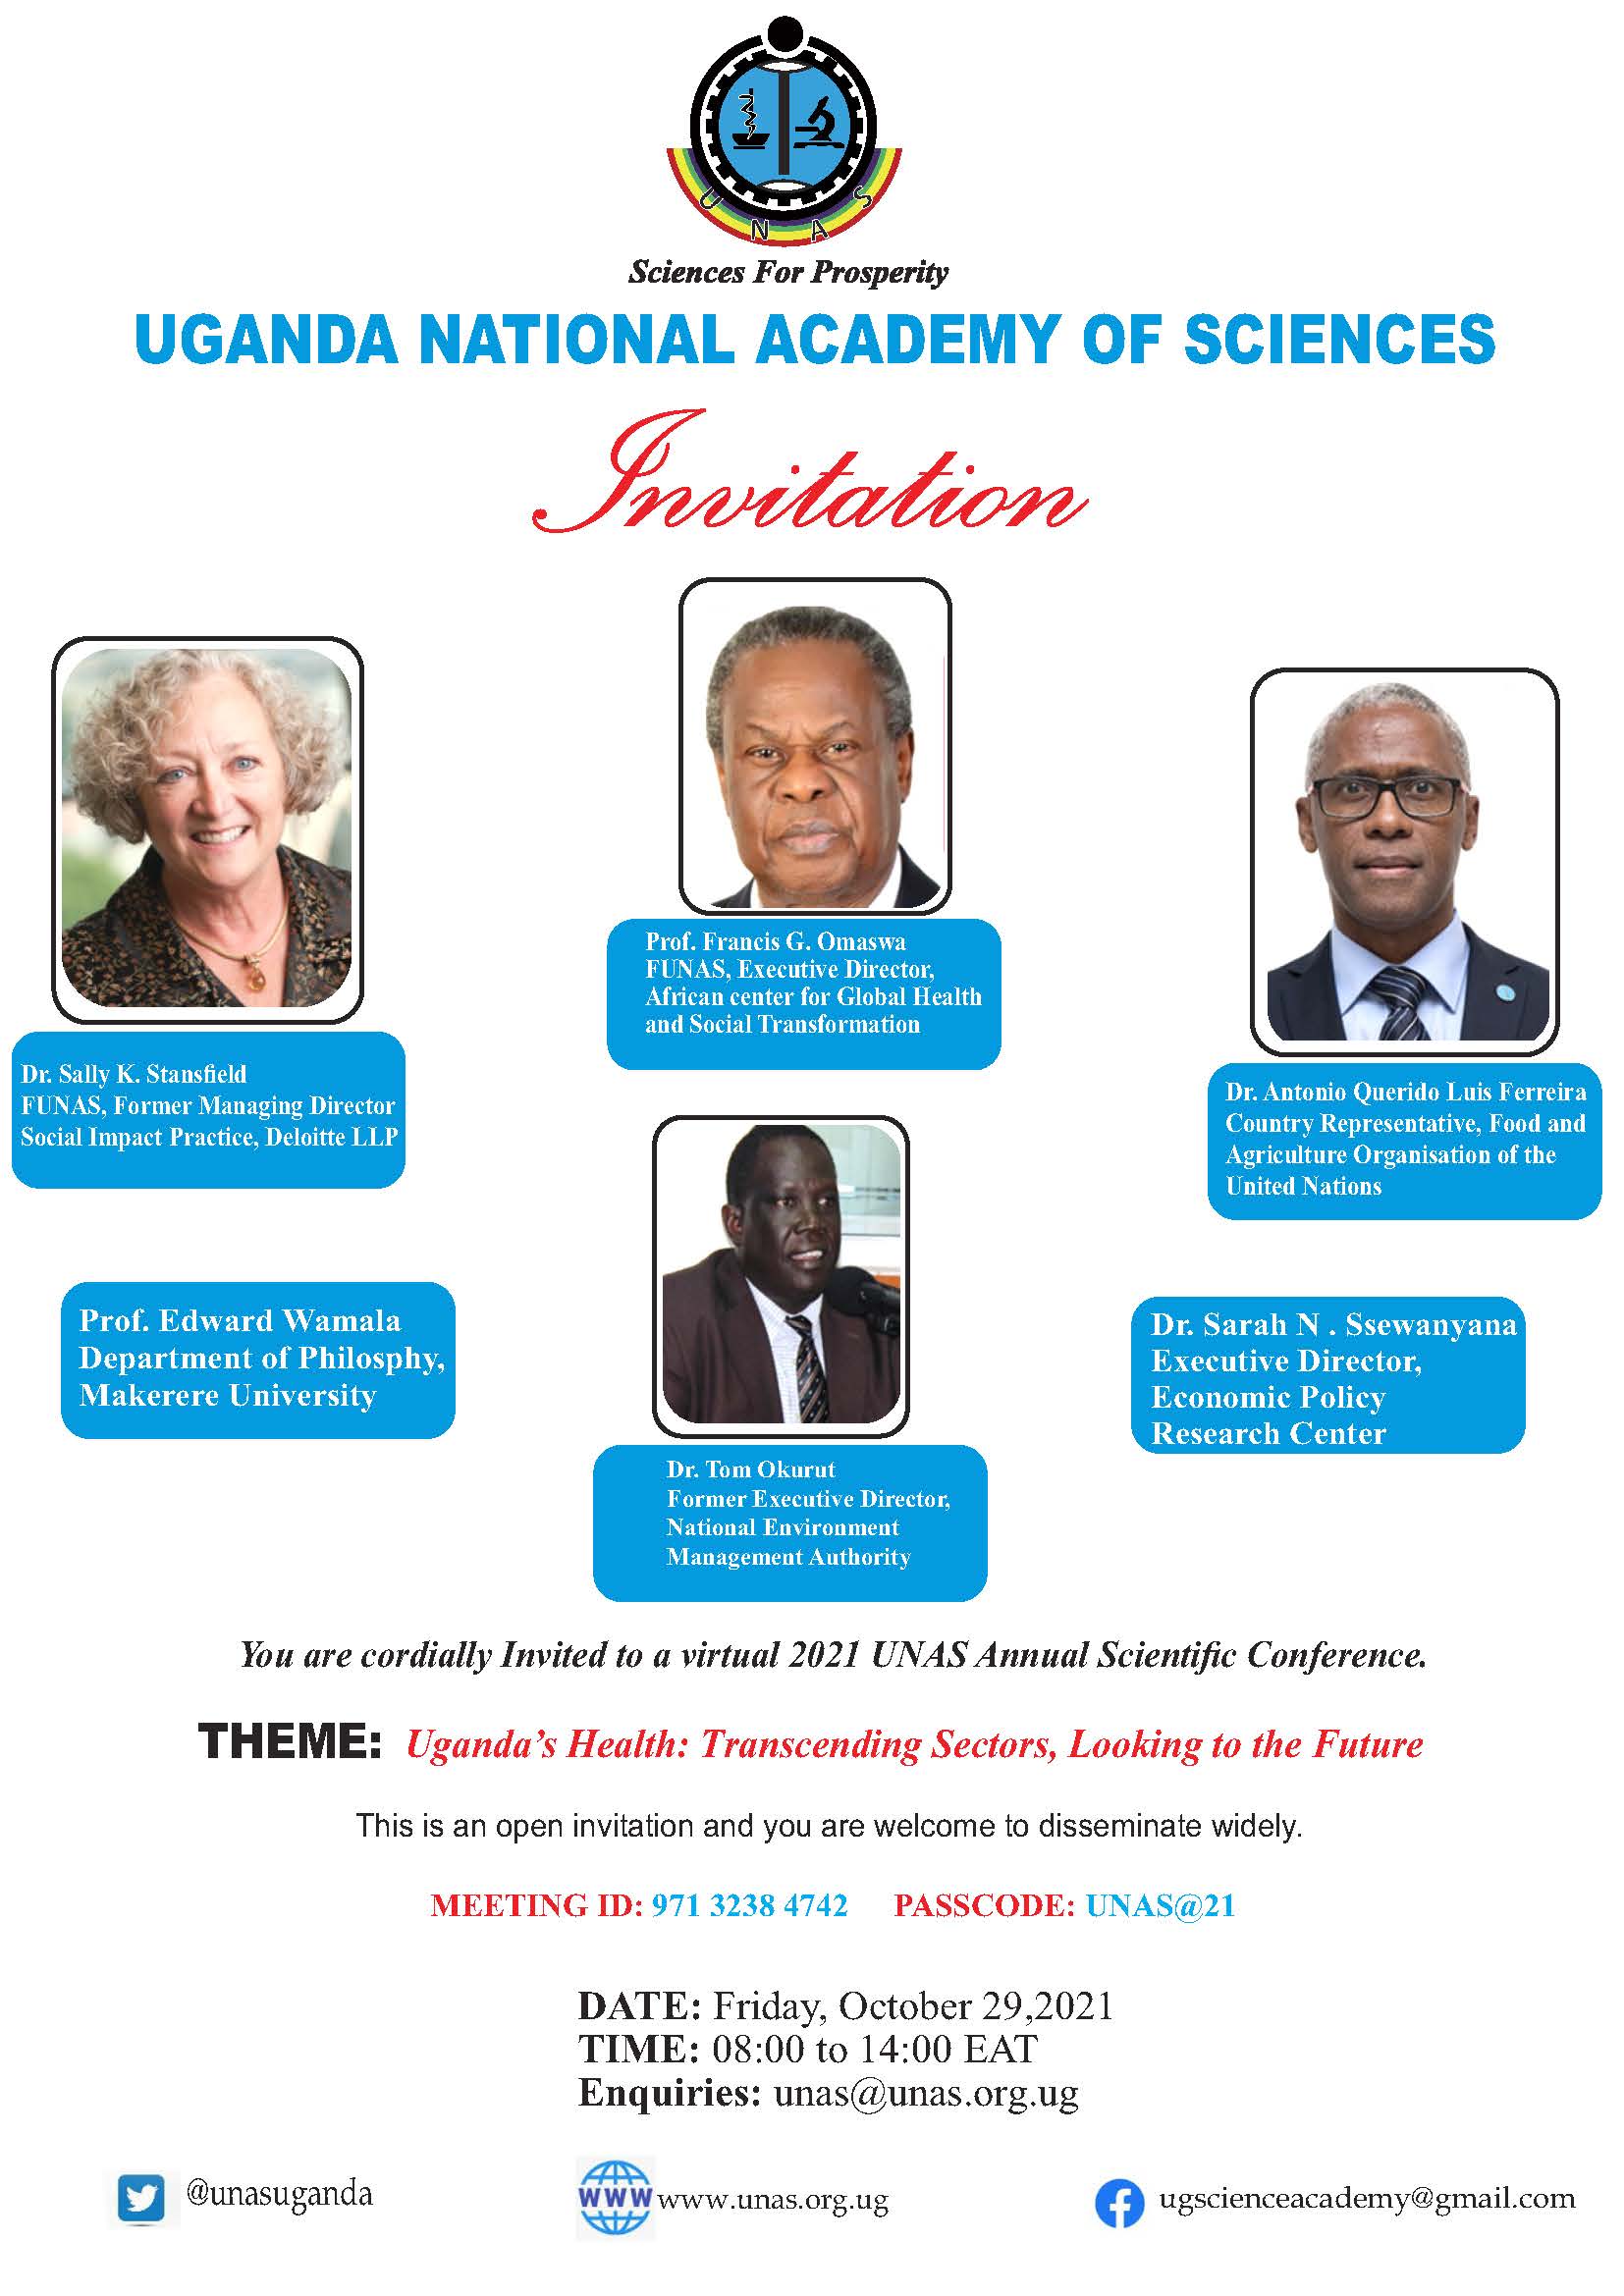  UNAS 2021 Annual Scientific Conference